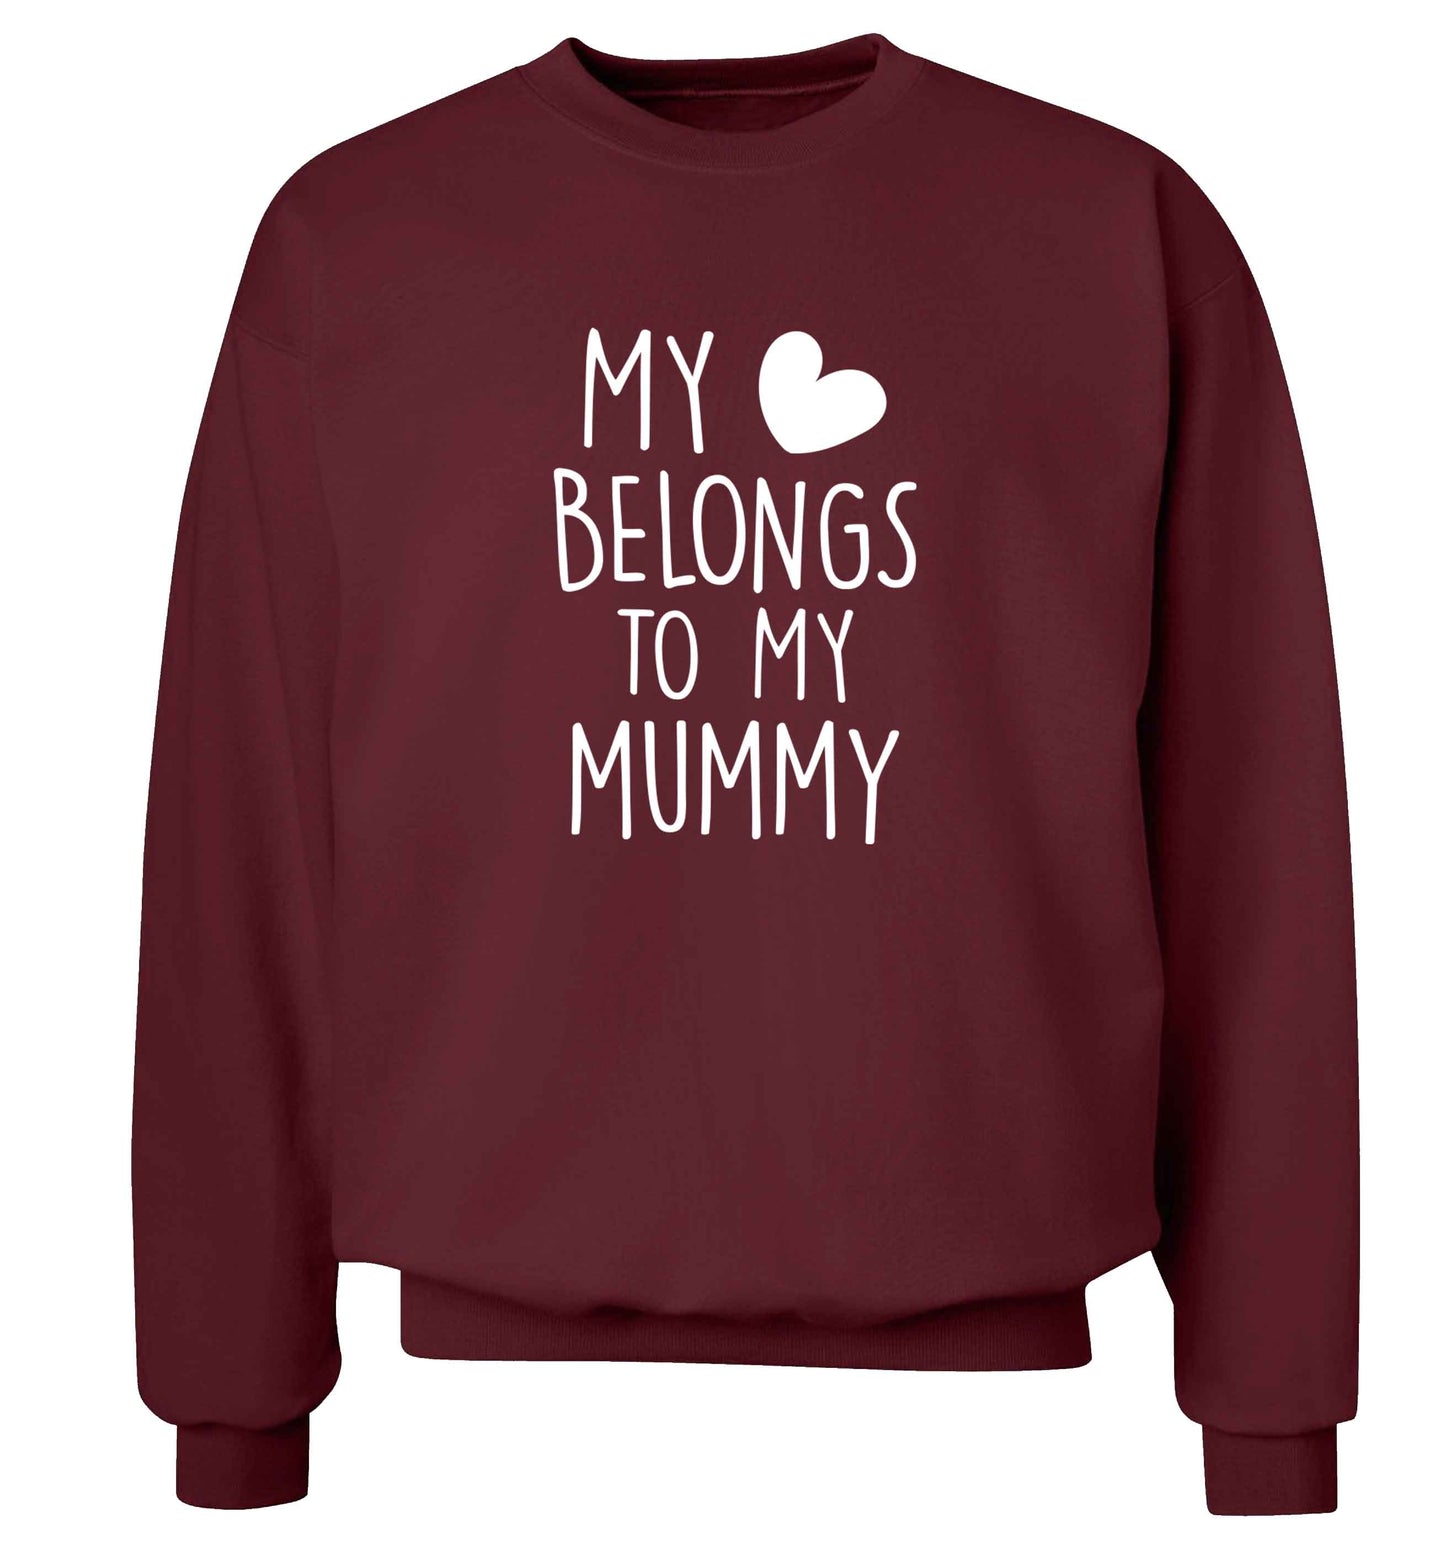 My heart belongs to my mummy adult's unisex maroon sweater 2XL